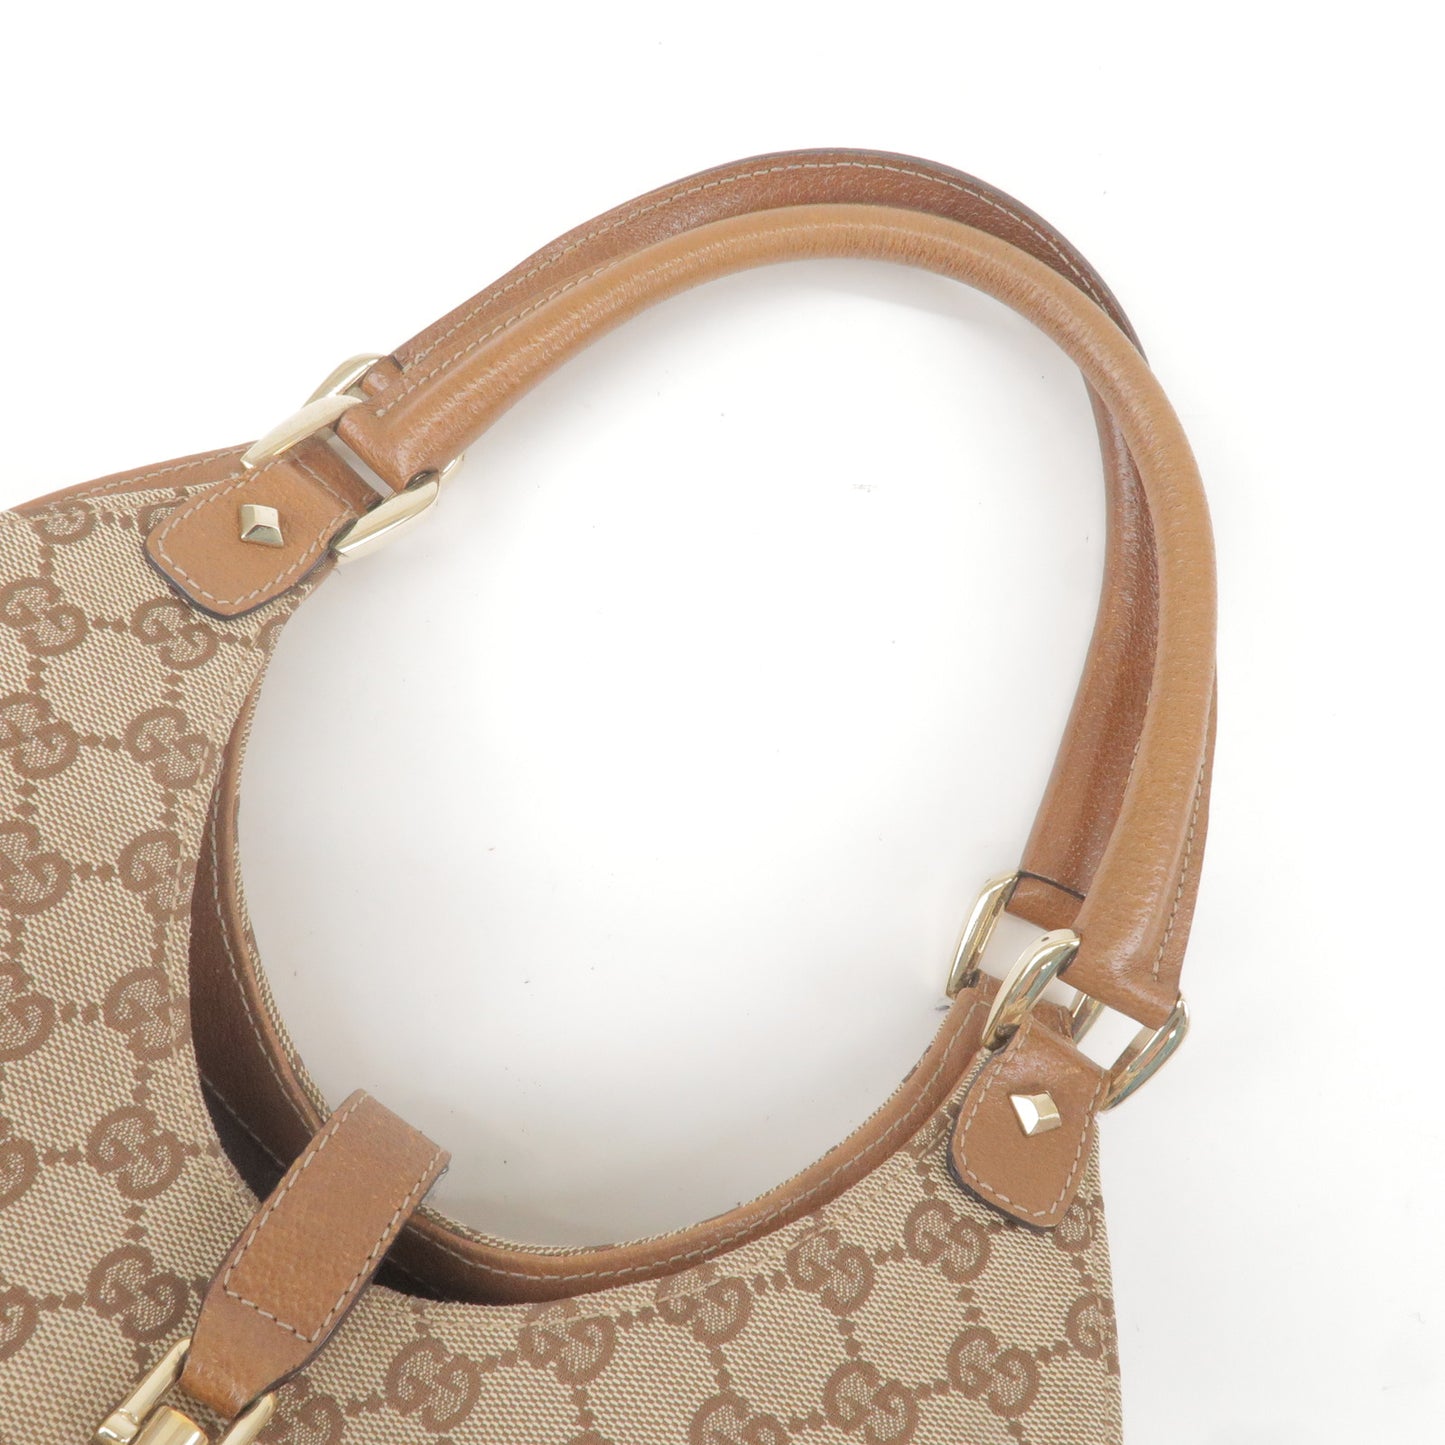 GUCCI New Jackie GG Canvas Leather Shoulder Bag Beige Brown 124407